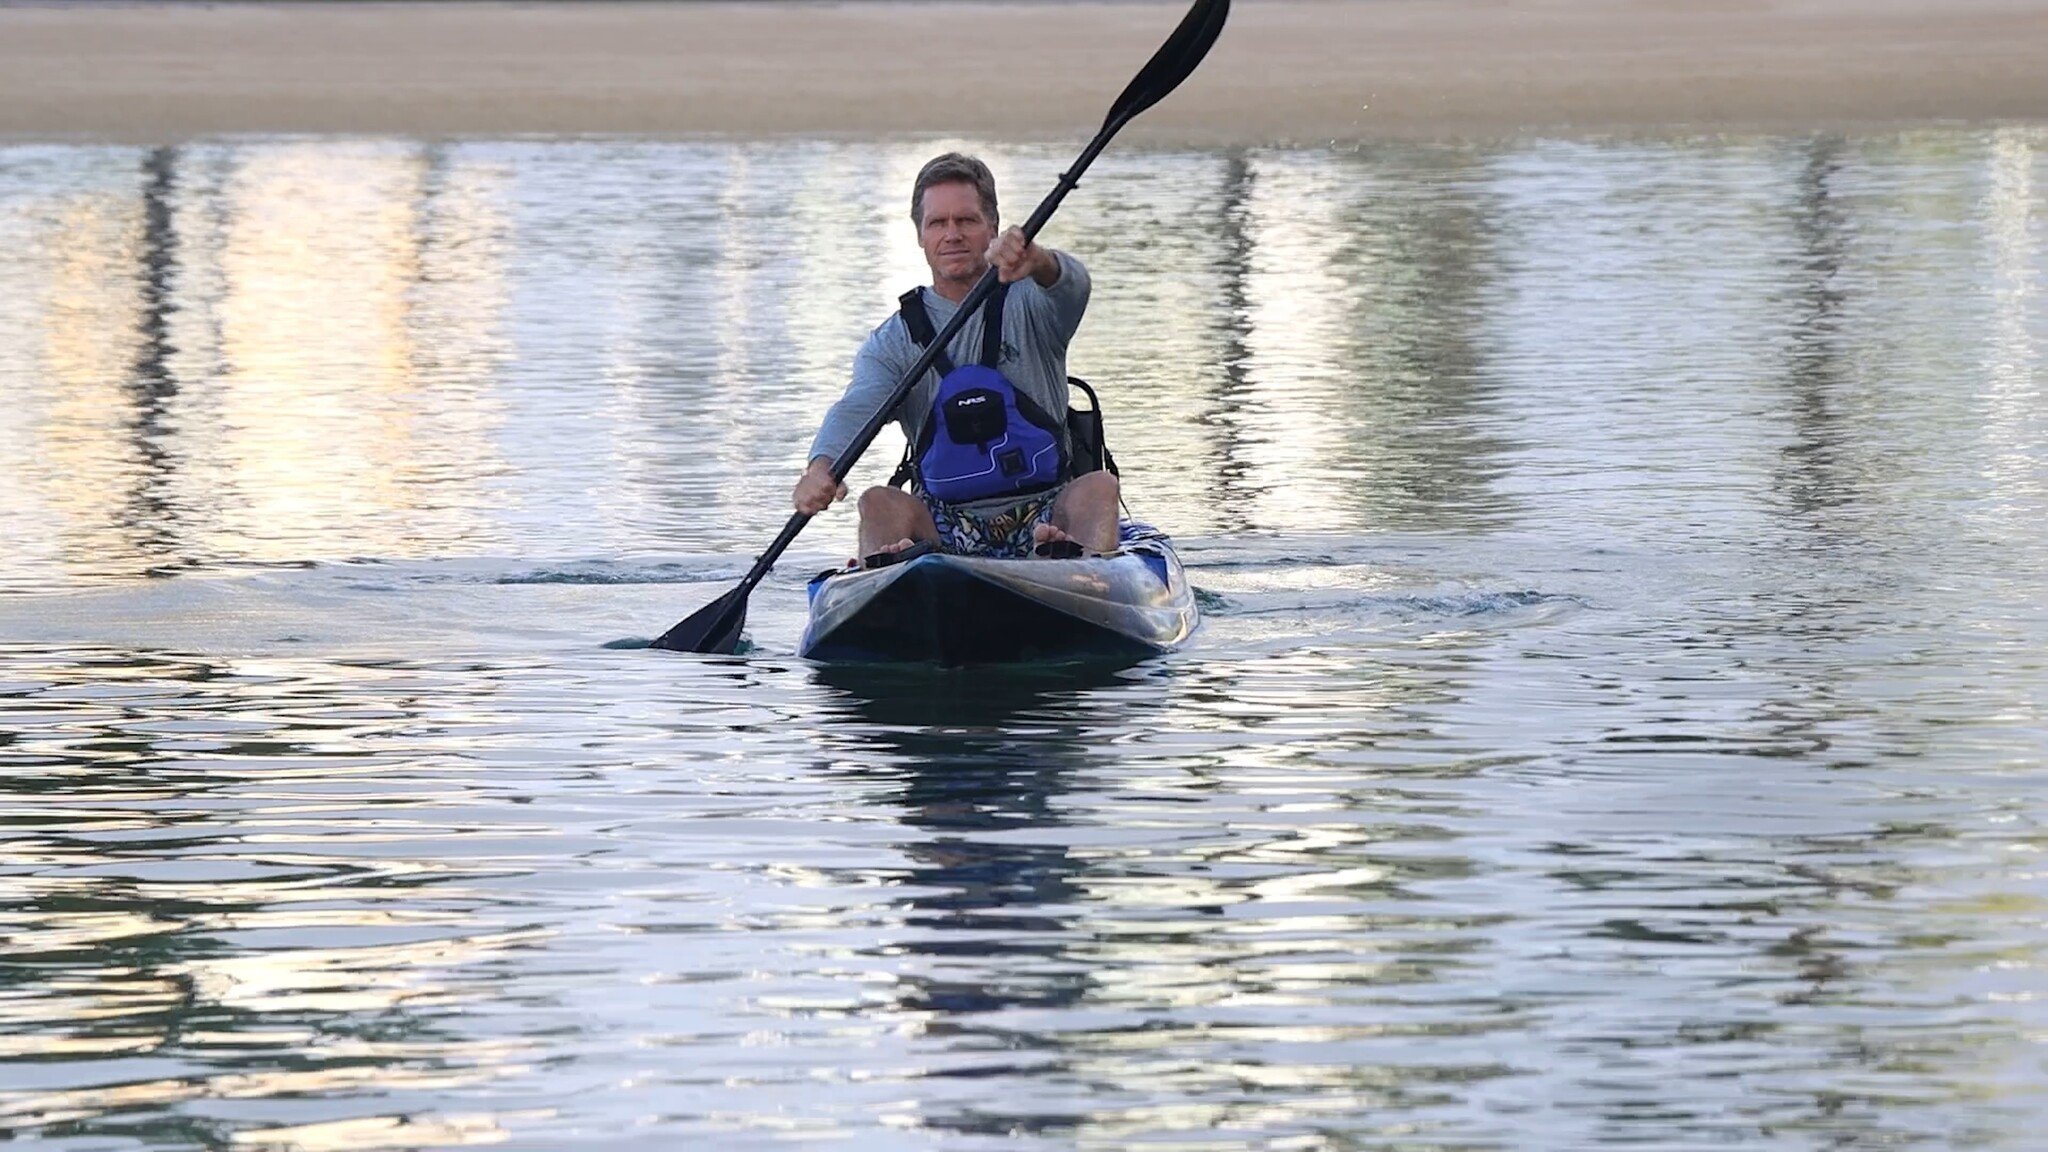 a stable kayak makes balancing easy